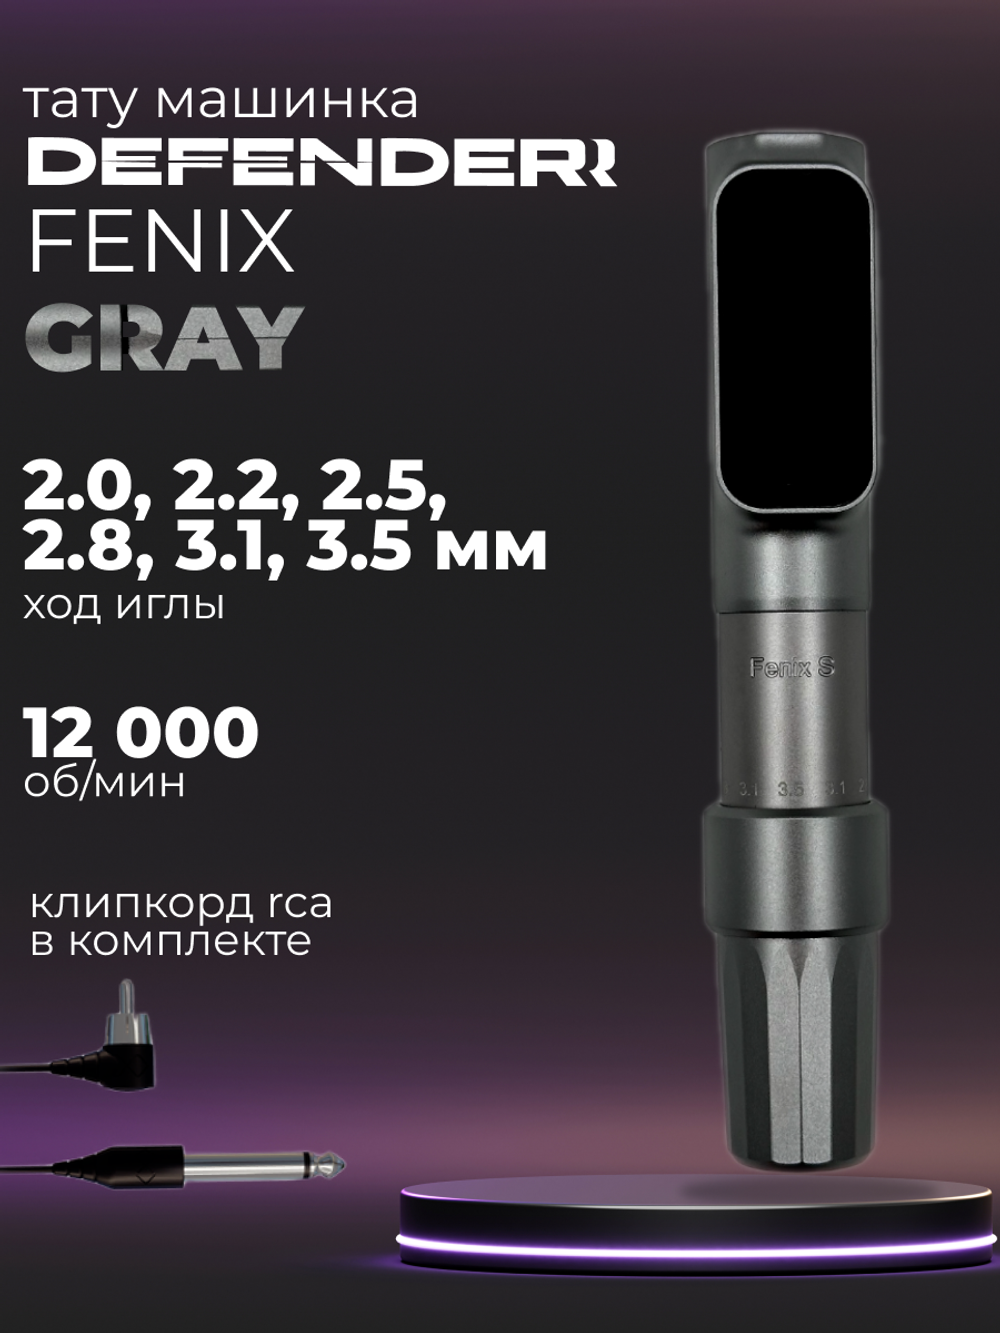 Defender Fenix S Grey машинка для татуажа